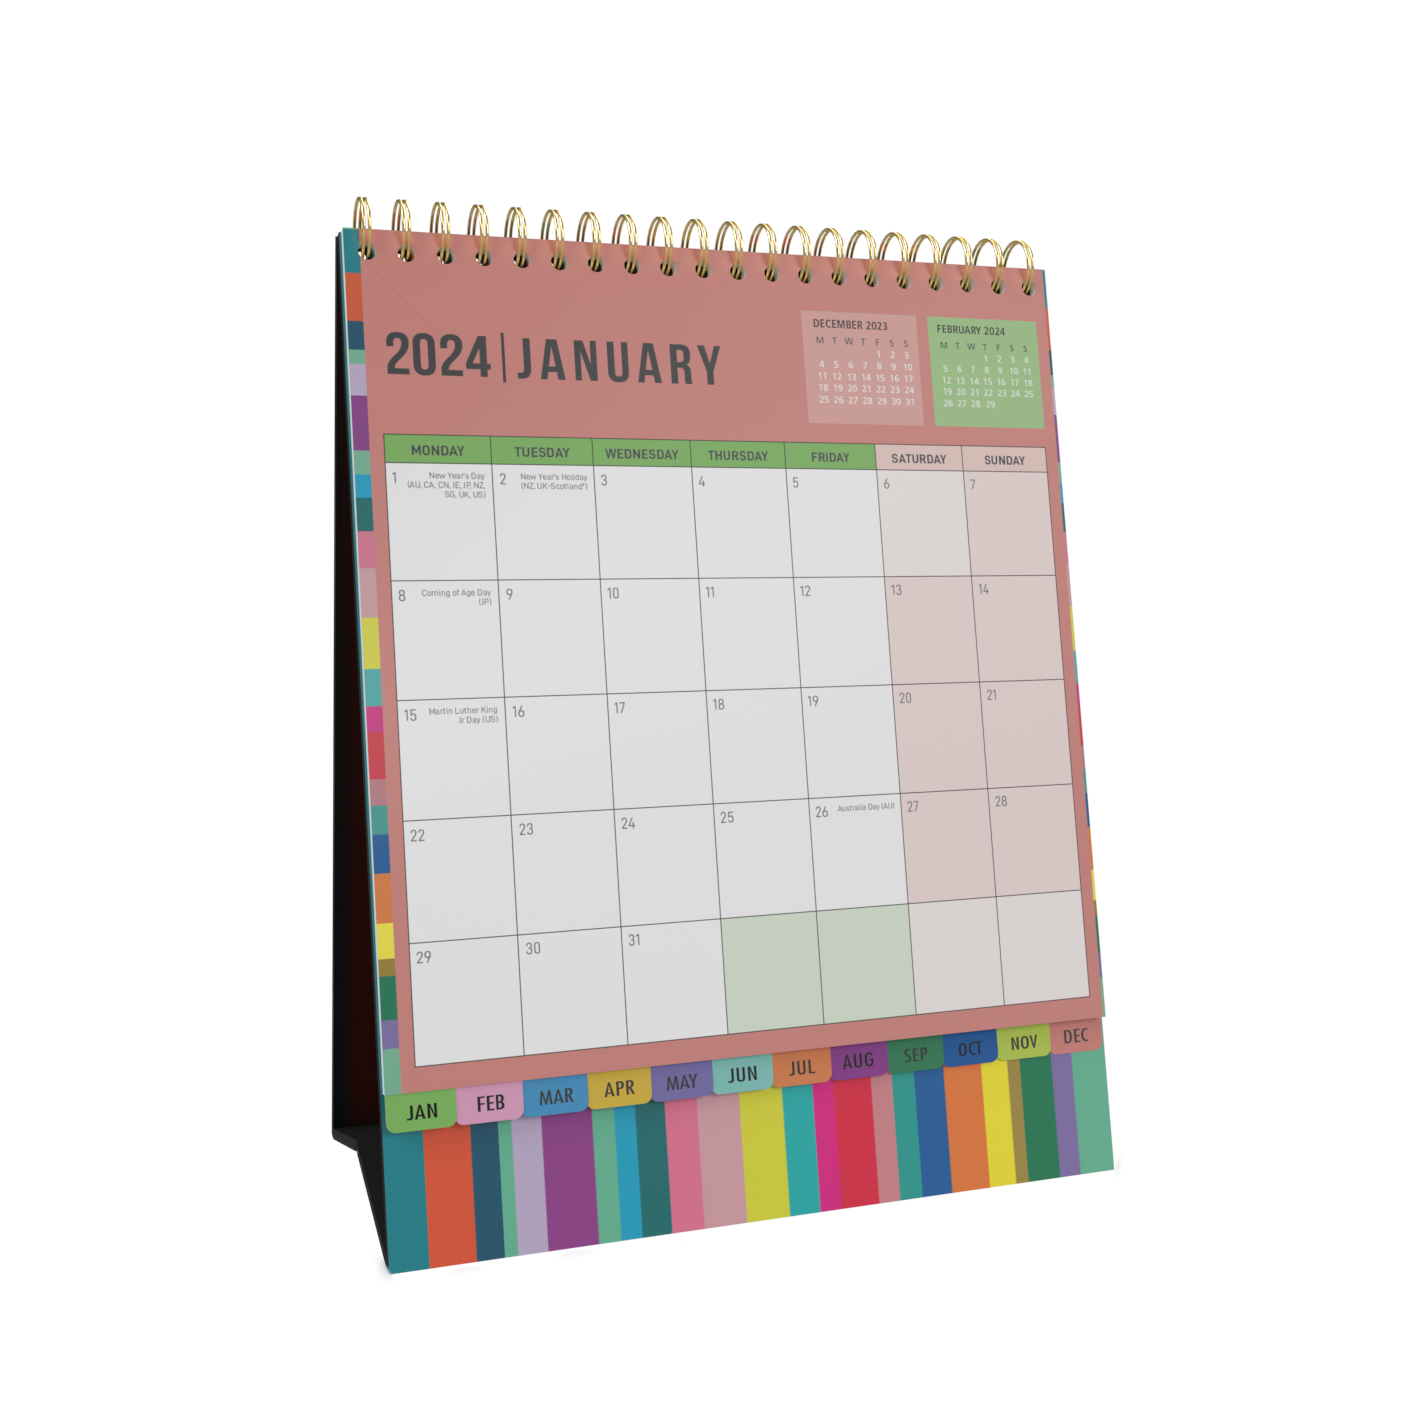 Edge Rainbow Desktop Calendar 2024 - Month to View